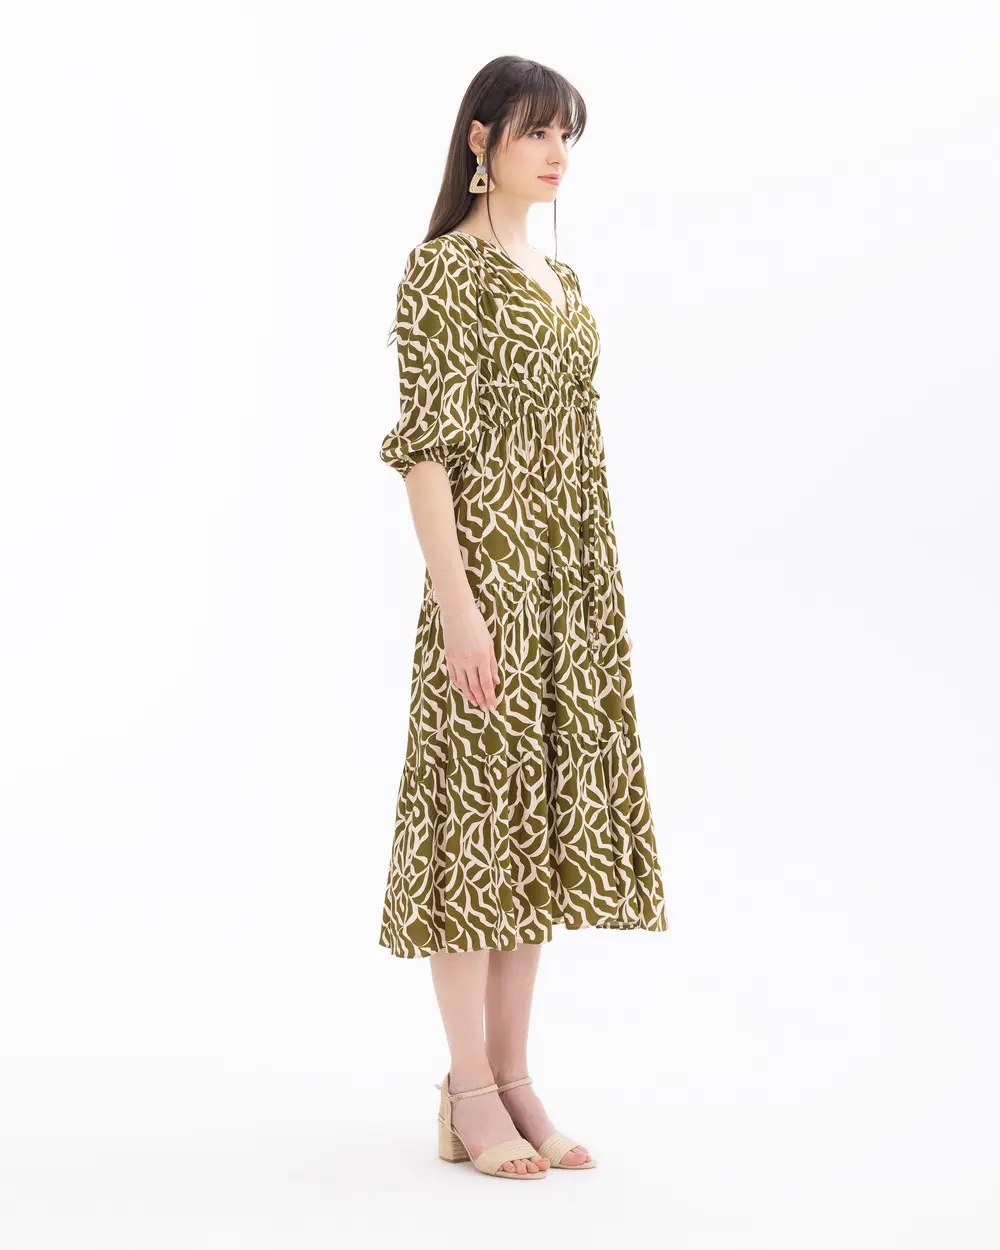 V-Neck Patterned Dress with Drawstring Waist